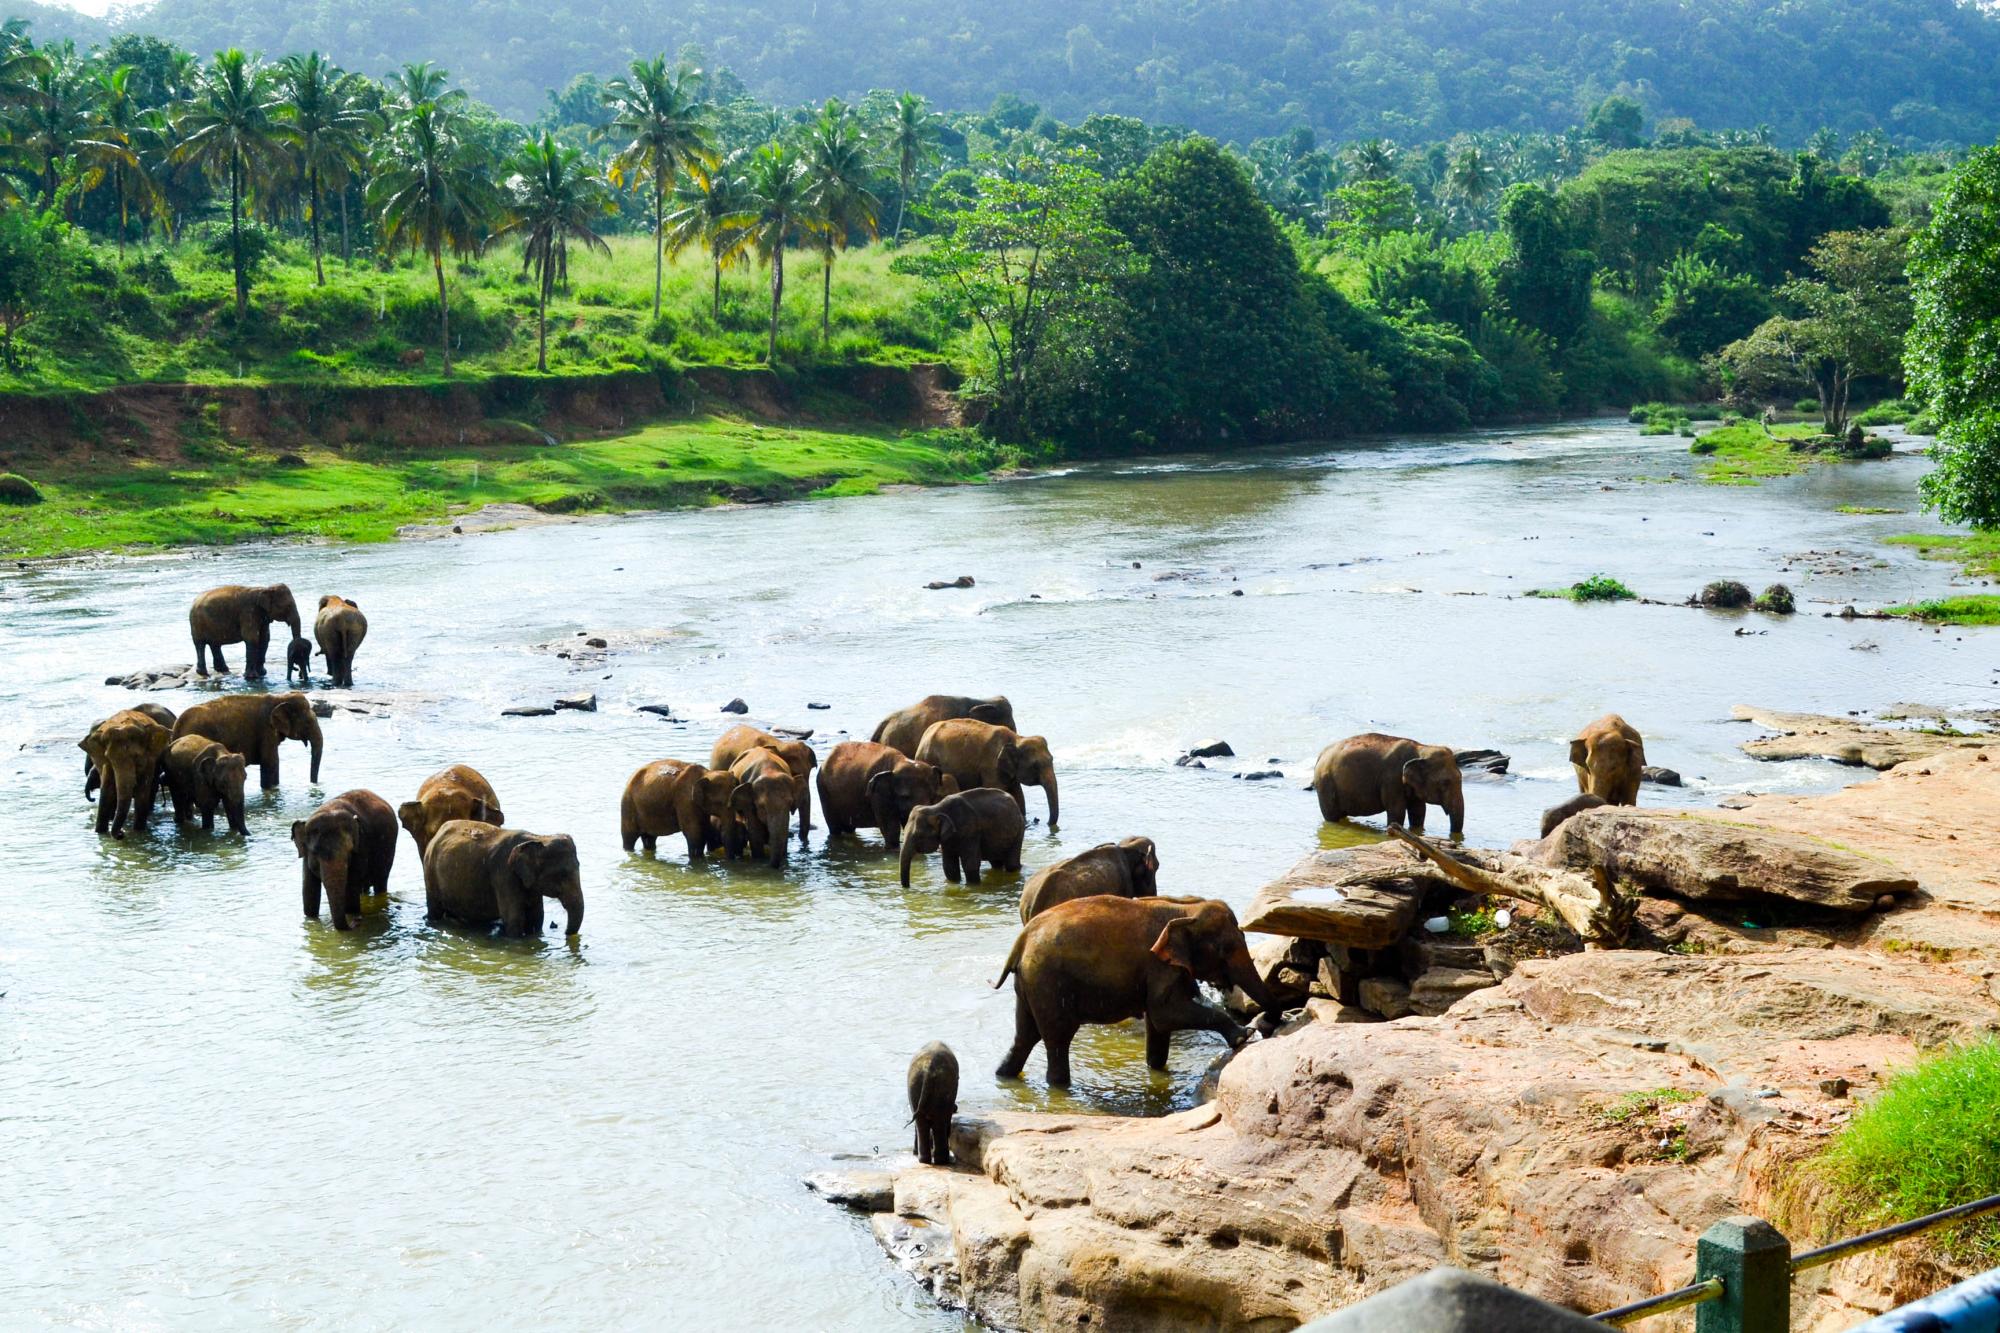 A group of elephants in Srilanka.